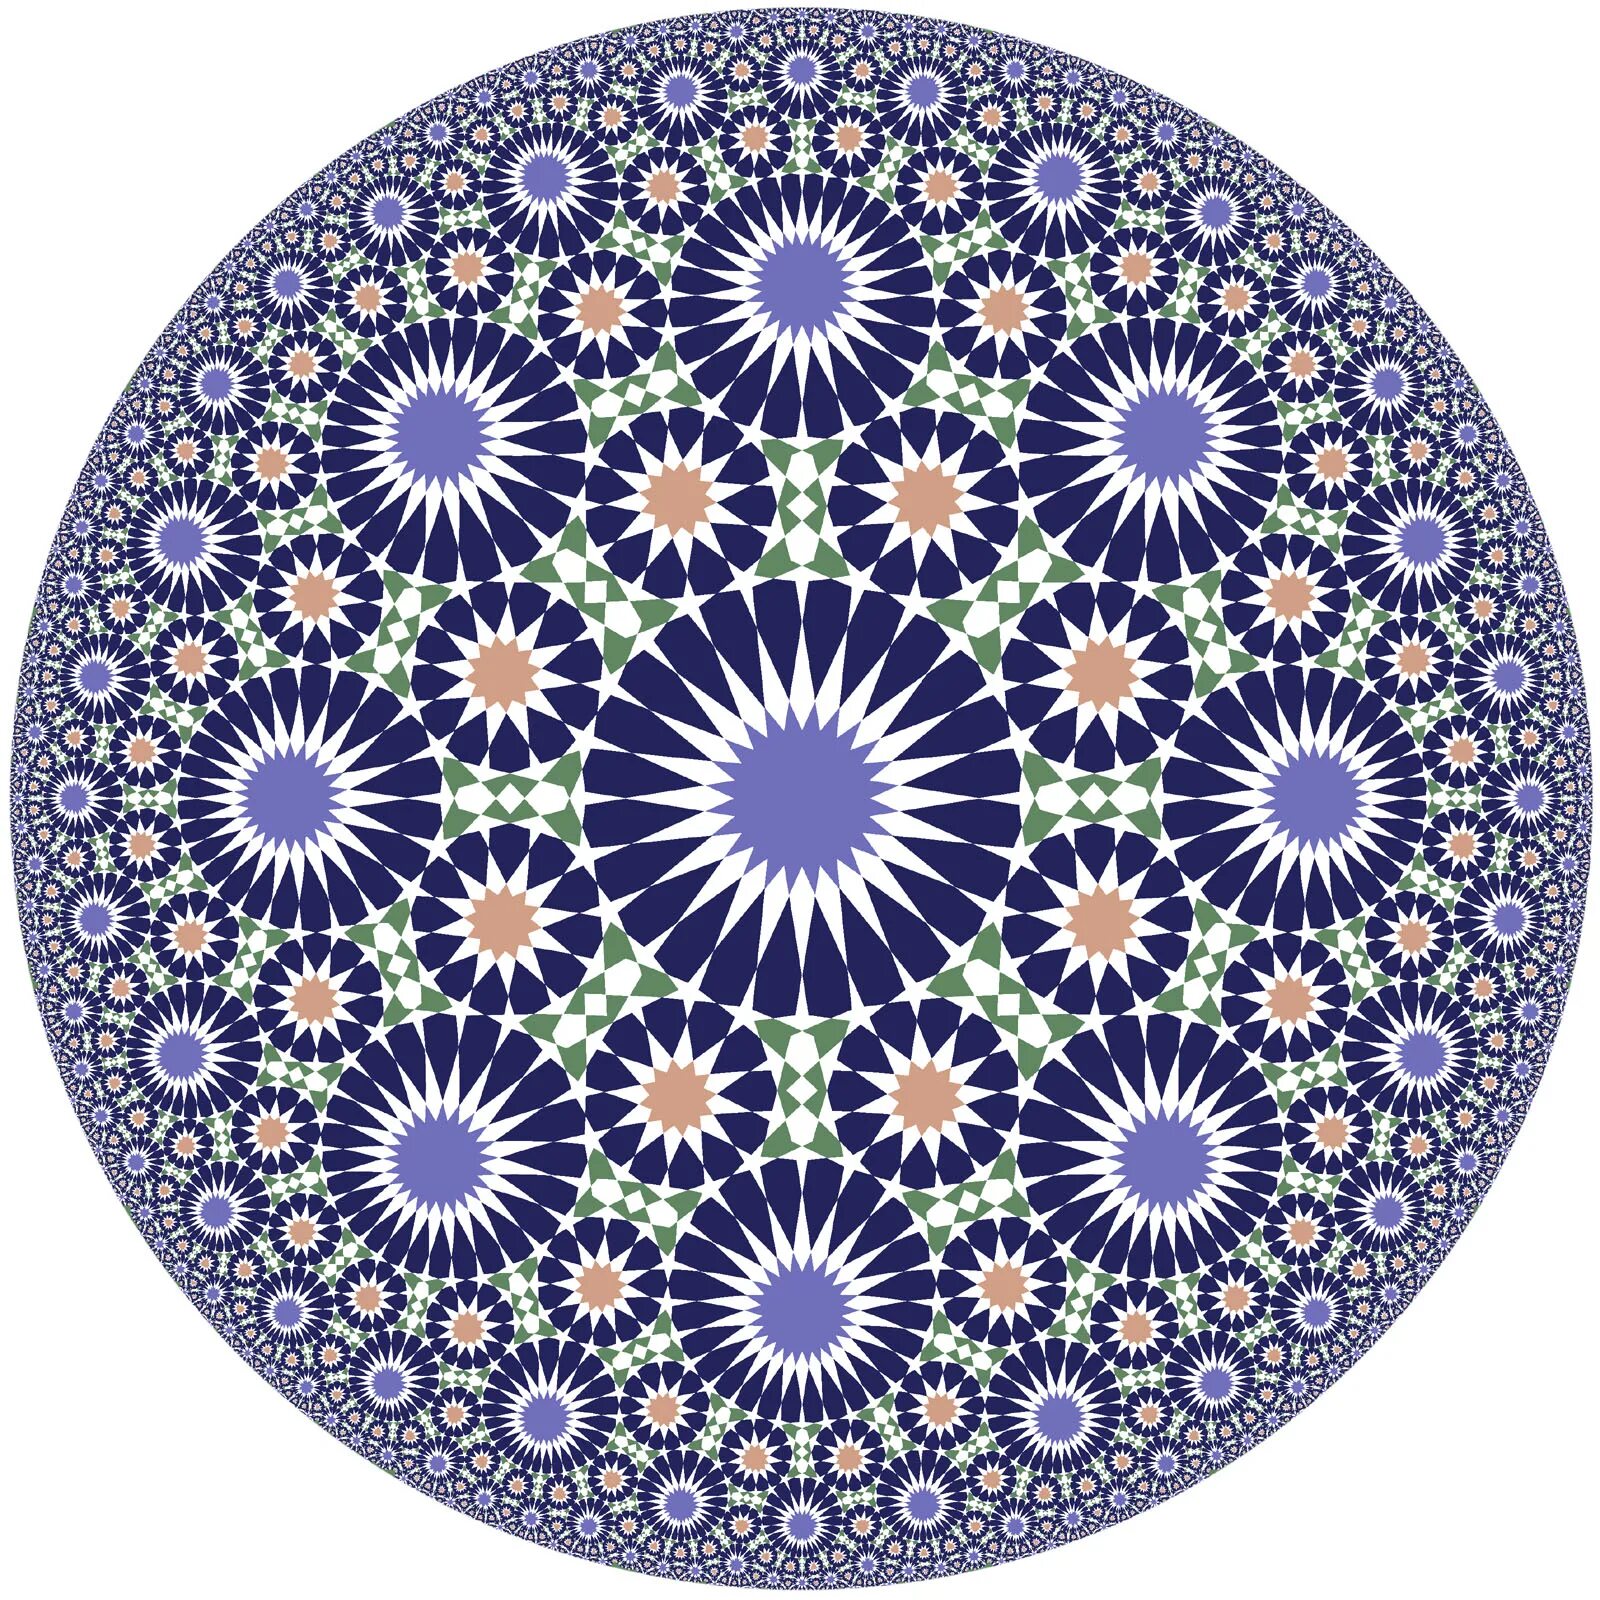 Round art. Геометрический орнамент. Арабский геометрический орнамент. Мандала геометрический узор. Круглые геометрические узоры.